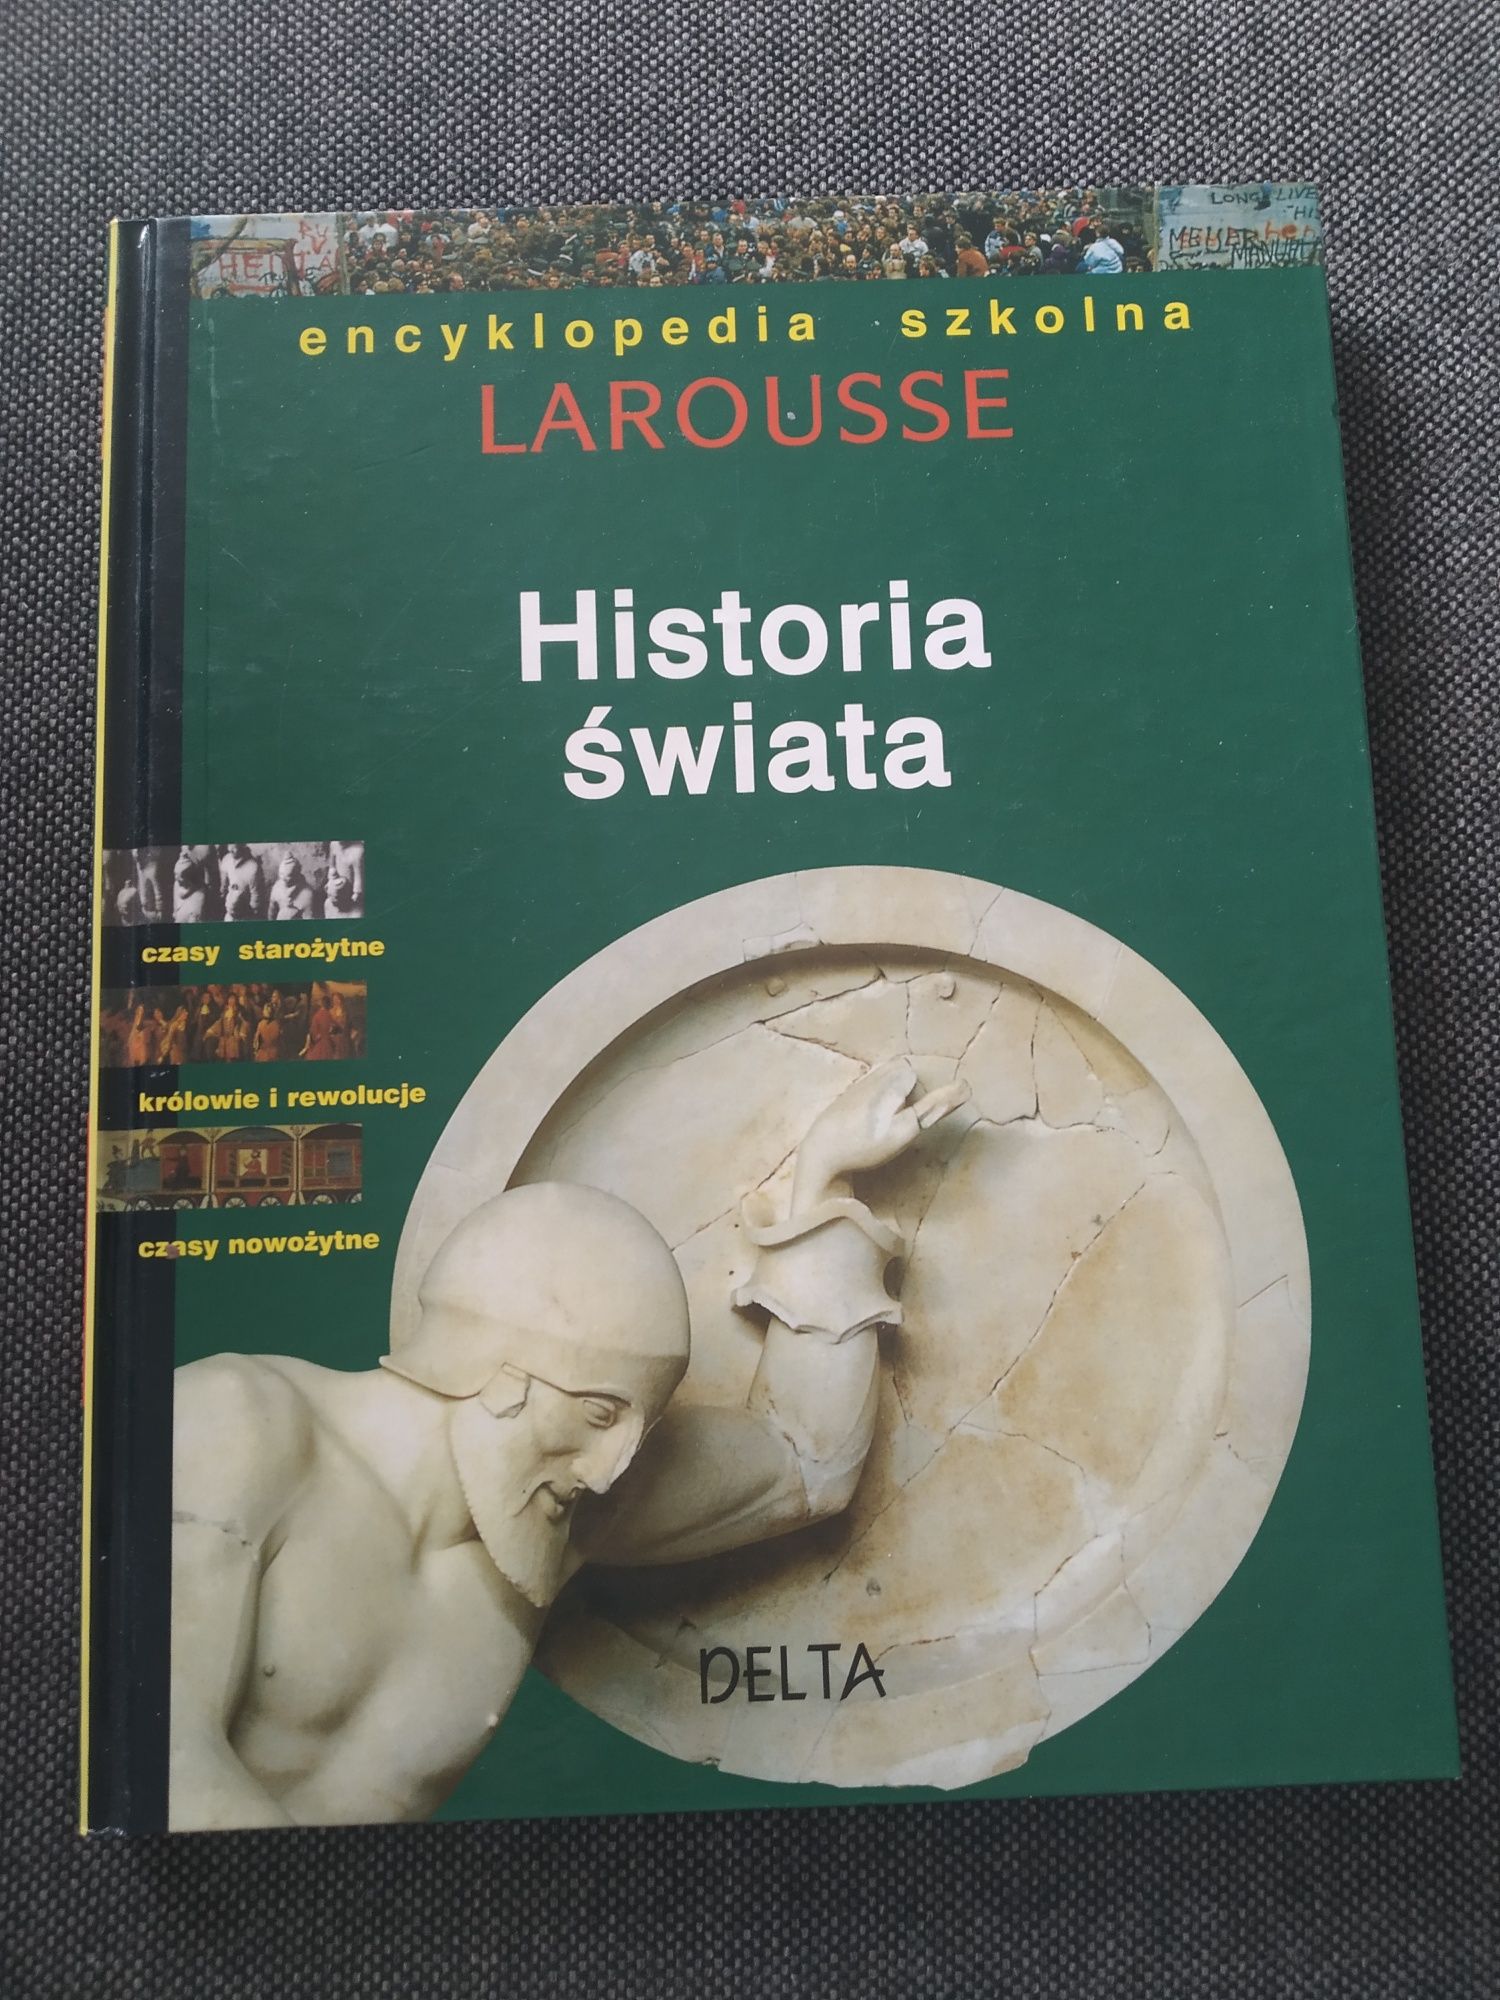 Encyklopedia szkolna Larousse Historia świata